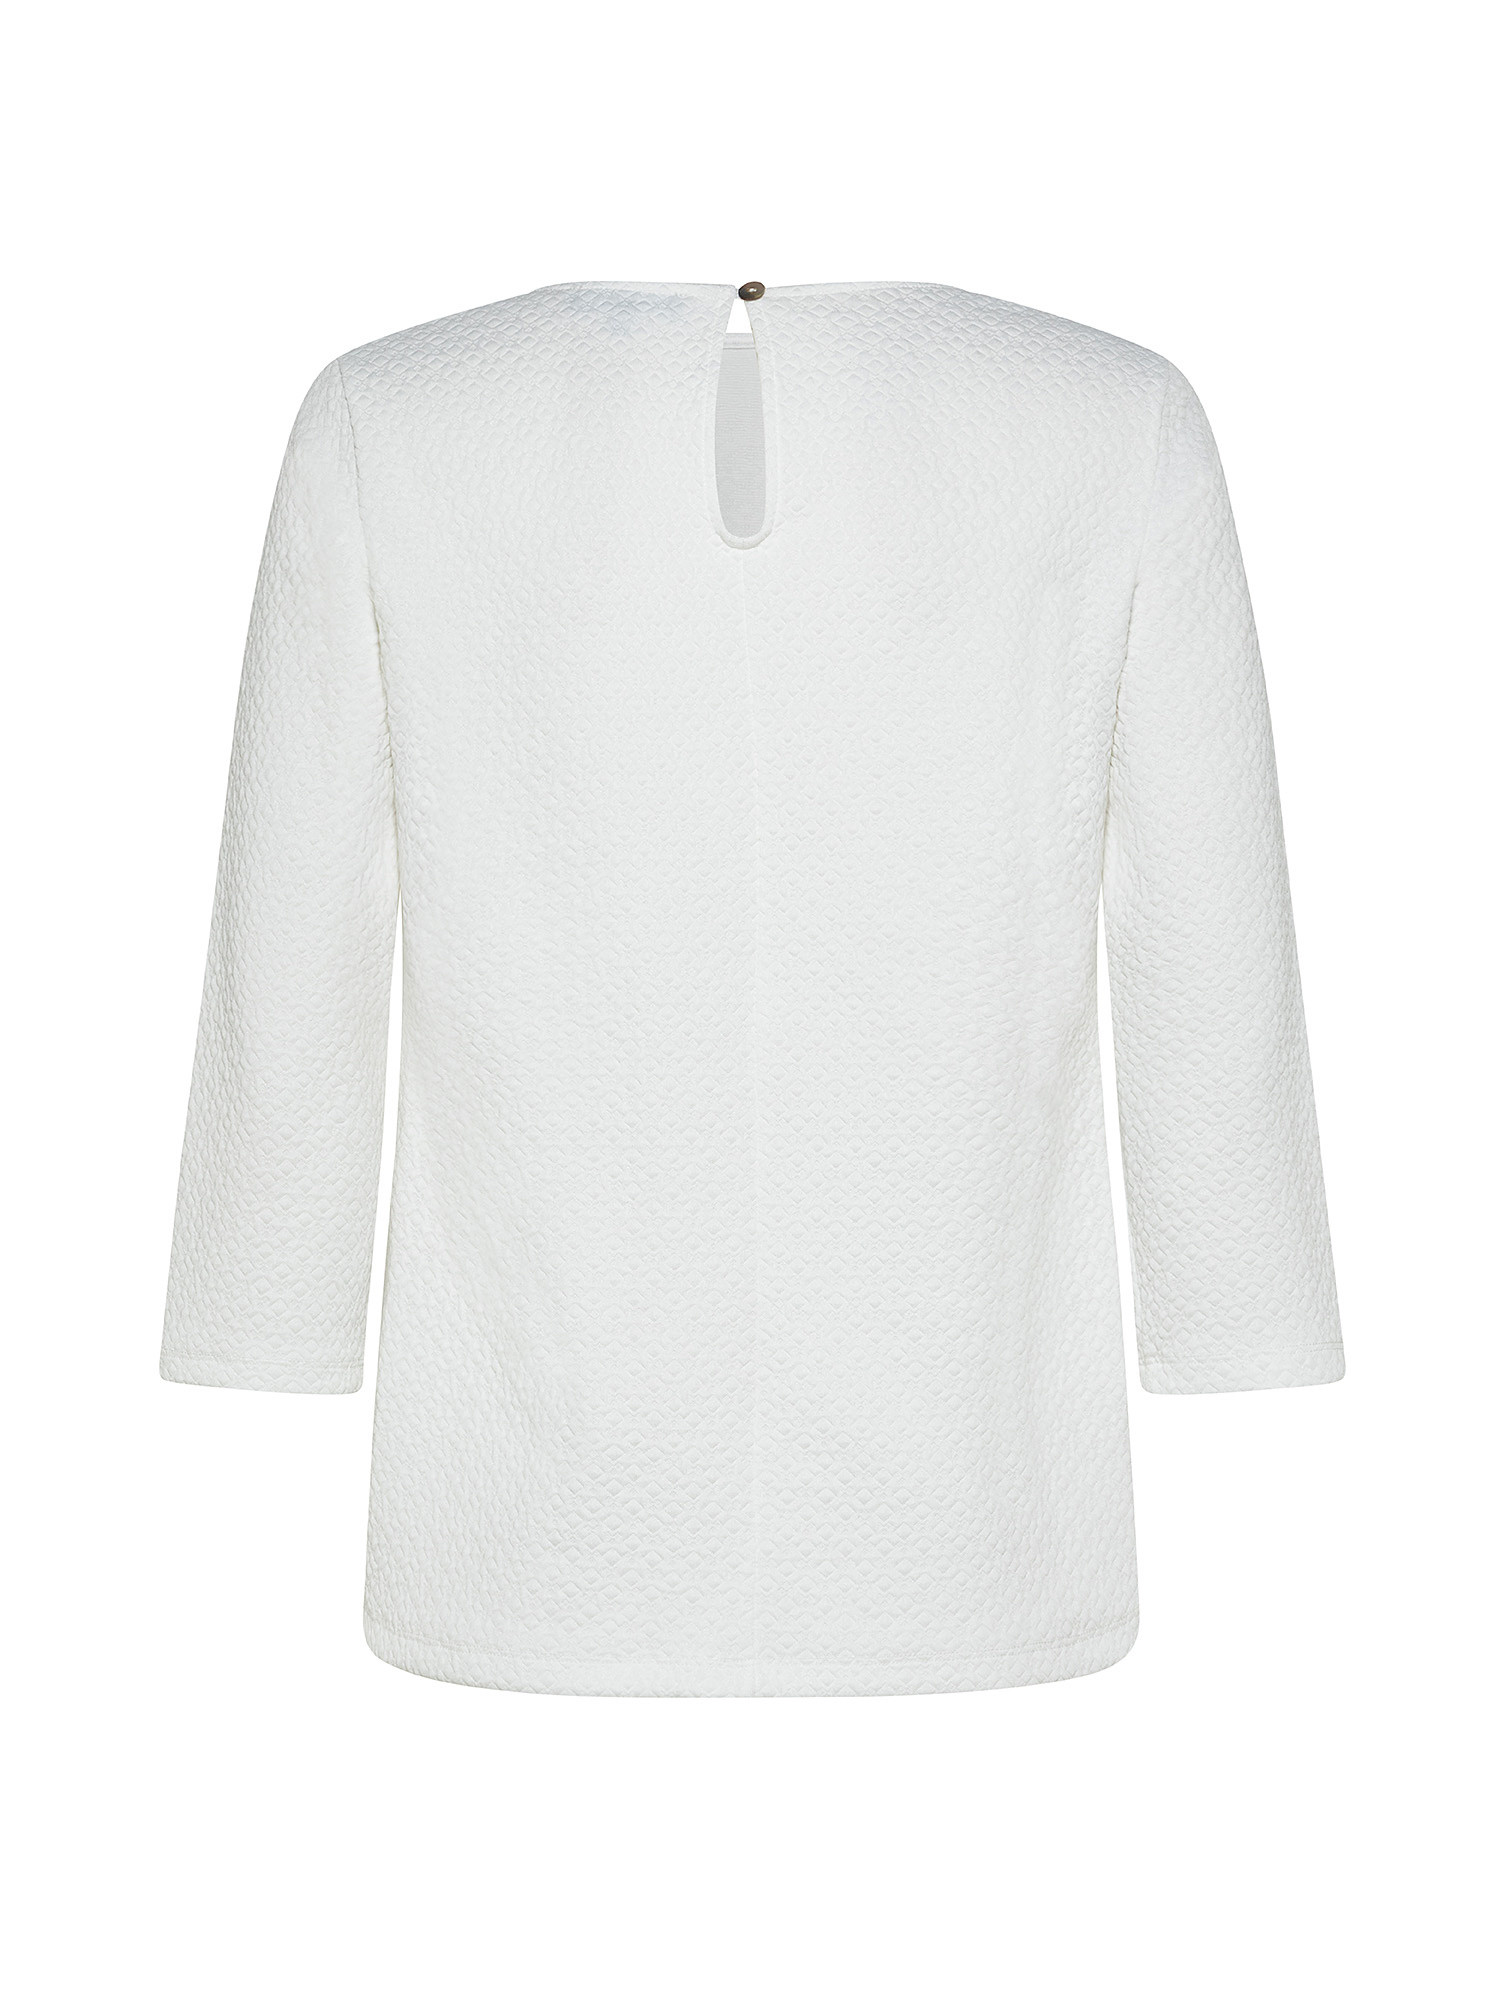 T-shirt girocollo effetto goffrato, Bianco, large image number 1